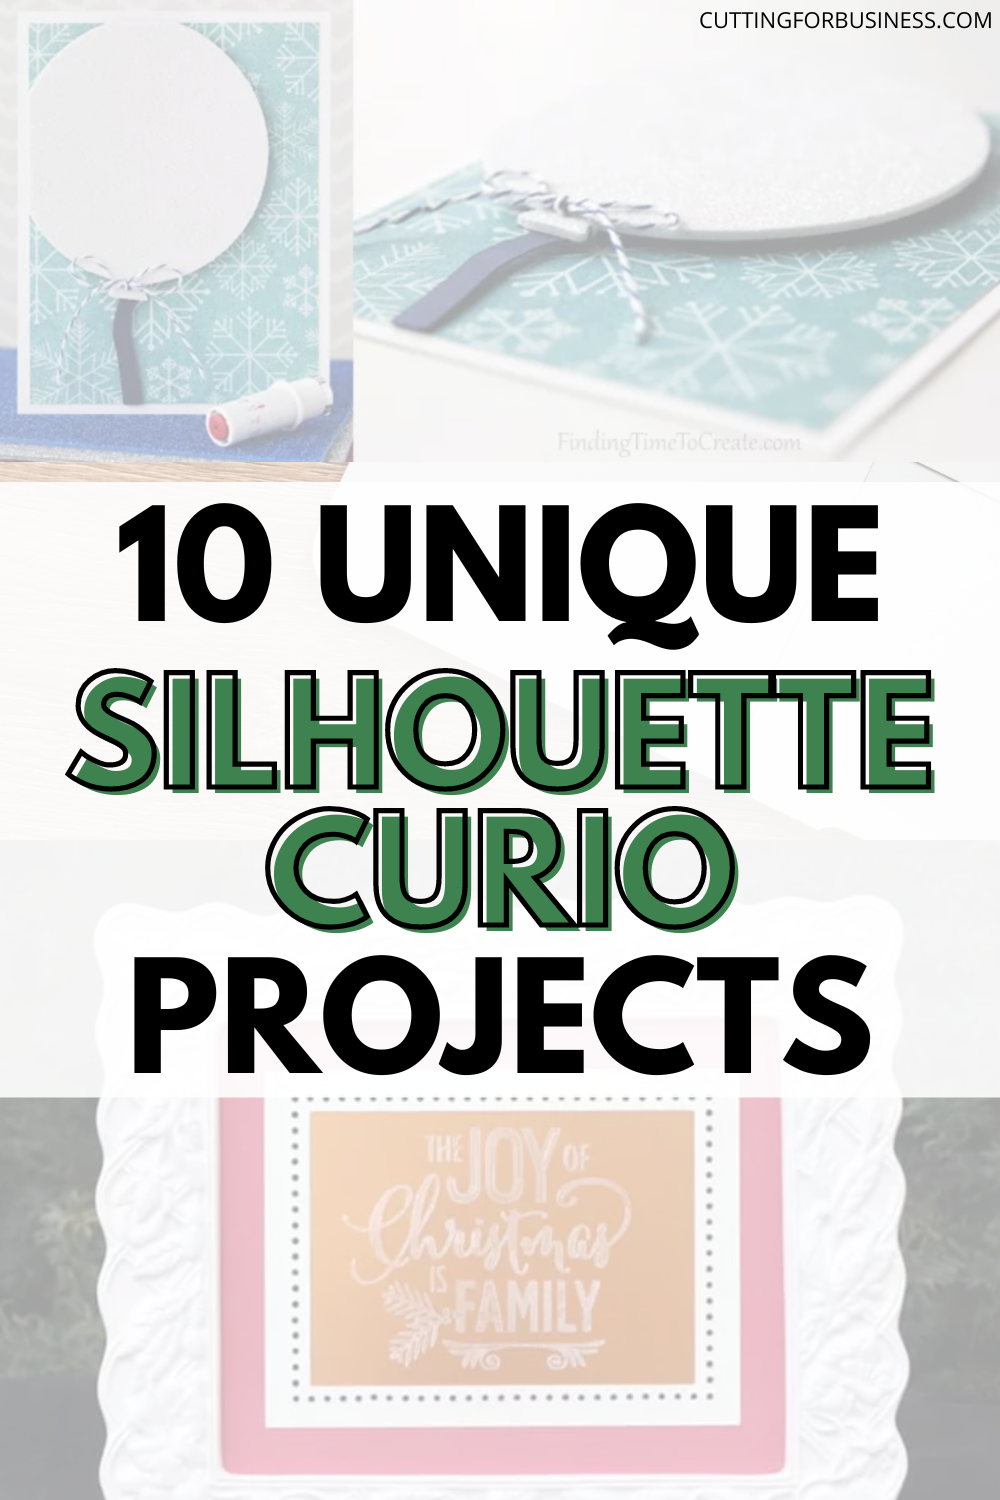 10 Unique Silhouette Curio Projects - cuttingforbusiness.com.